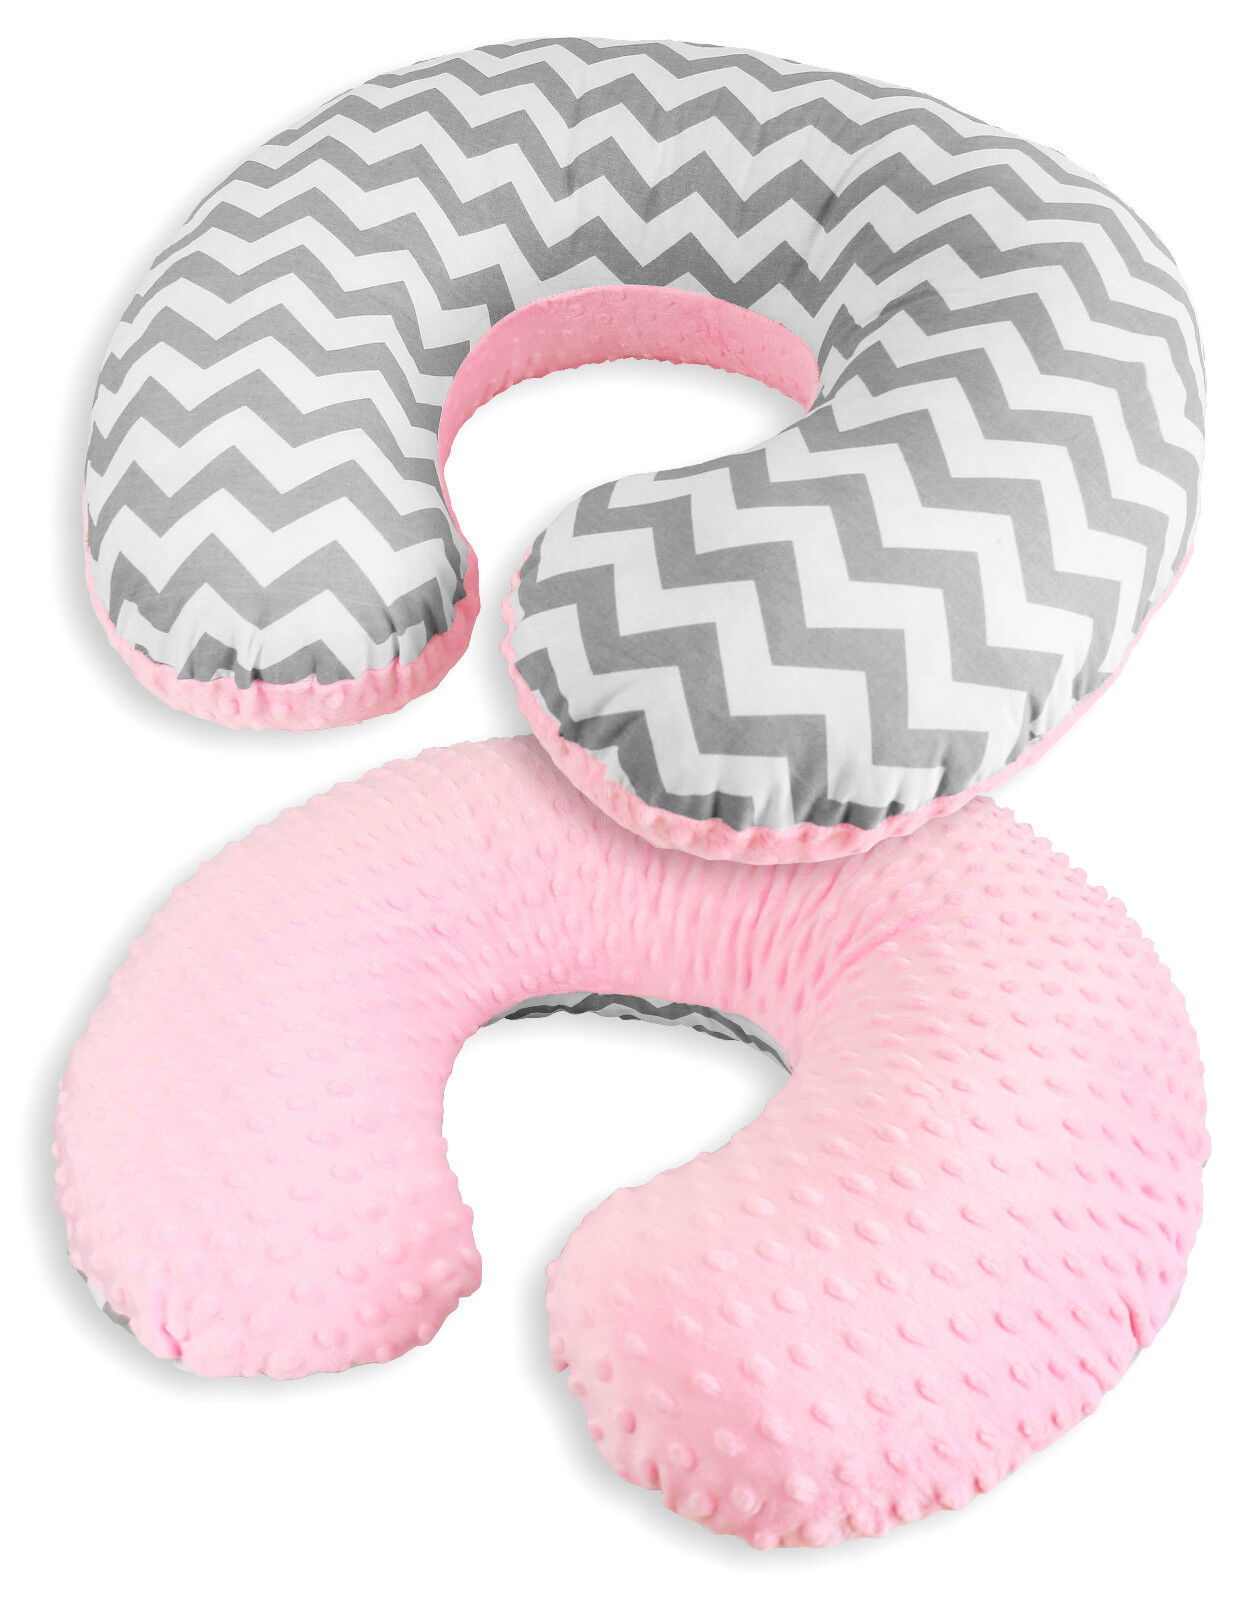 Baby Feeding Pillow Dimple Nursing Breastfeeding Pregnancy Pillow+Cover Pink/ zig zag